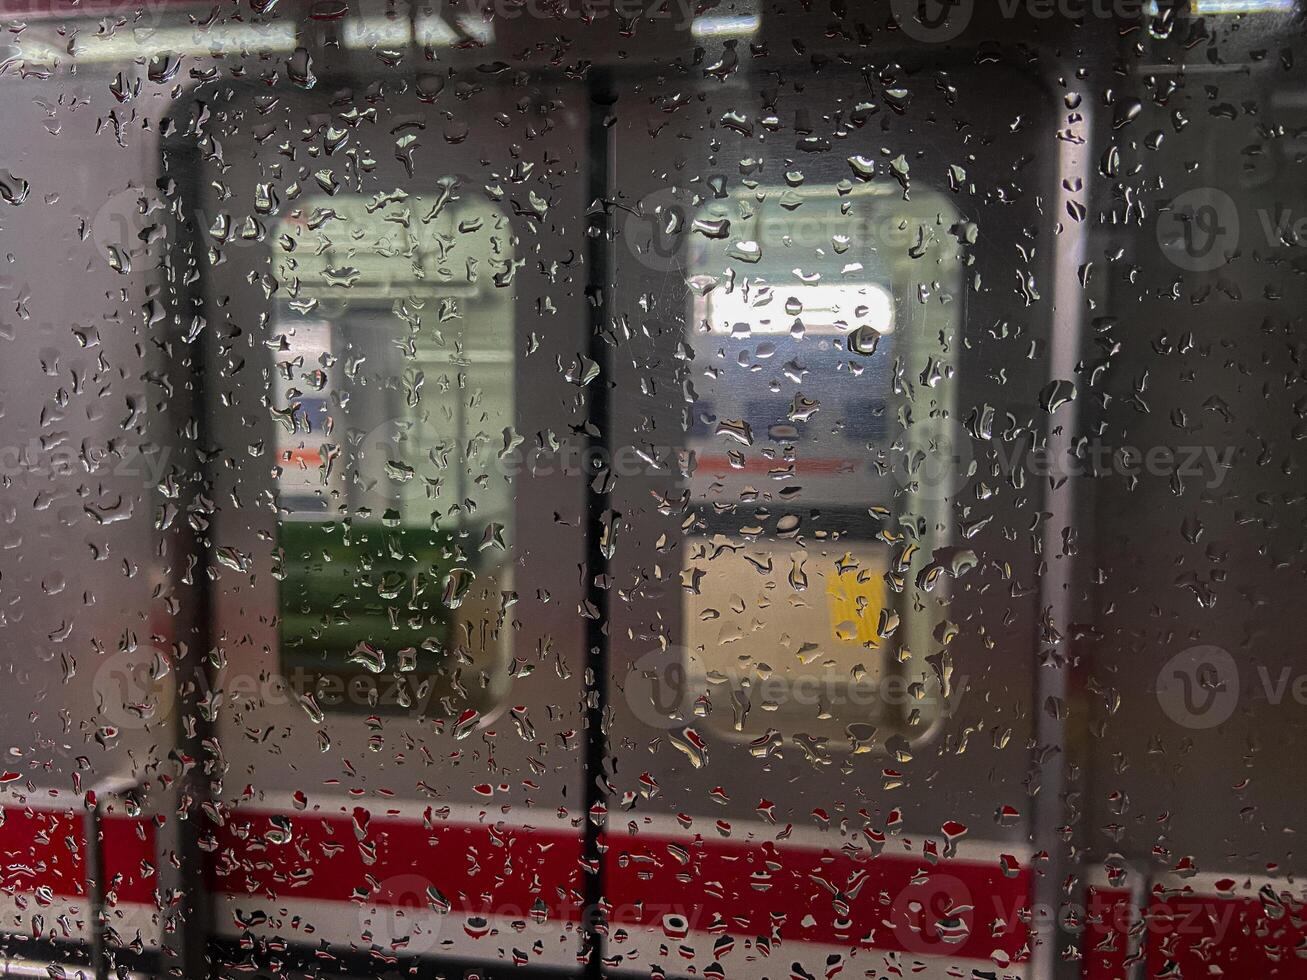 train door with water droplets photo